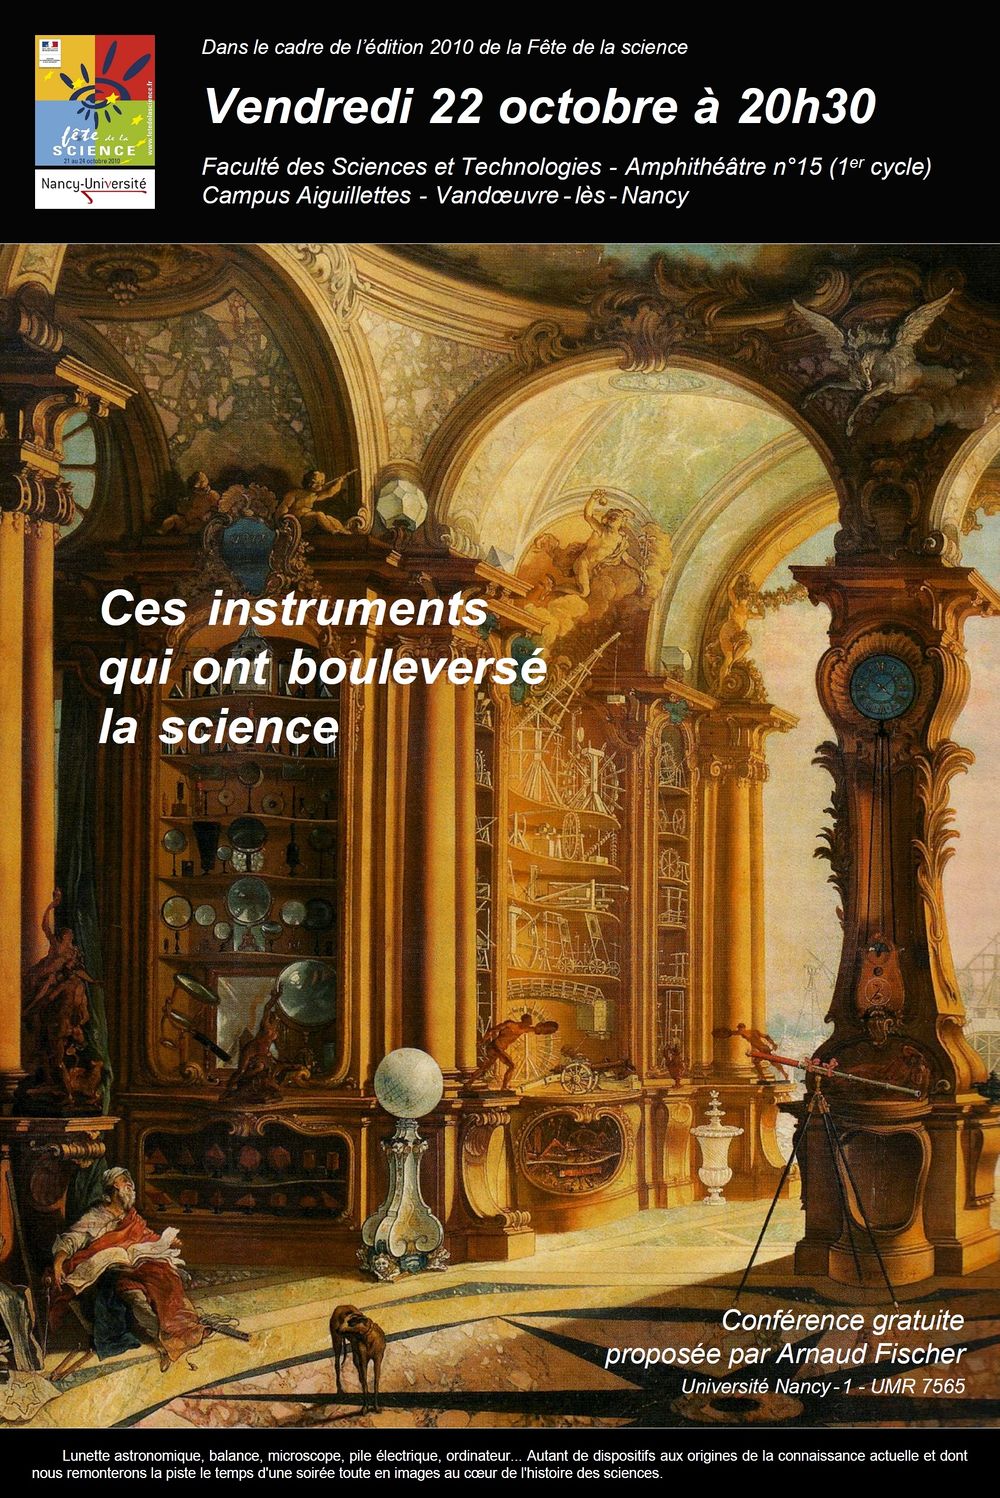 Affiche et resume conference instrument scientifique Vandoeuvre 2010.jpg